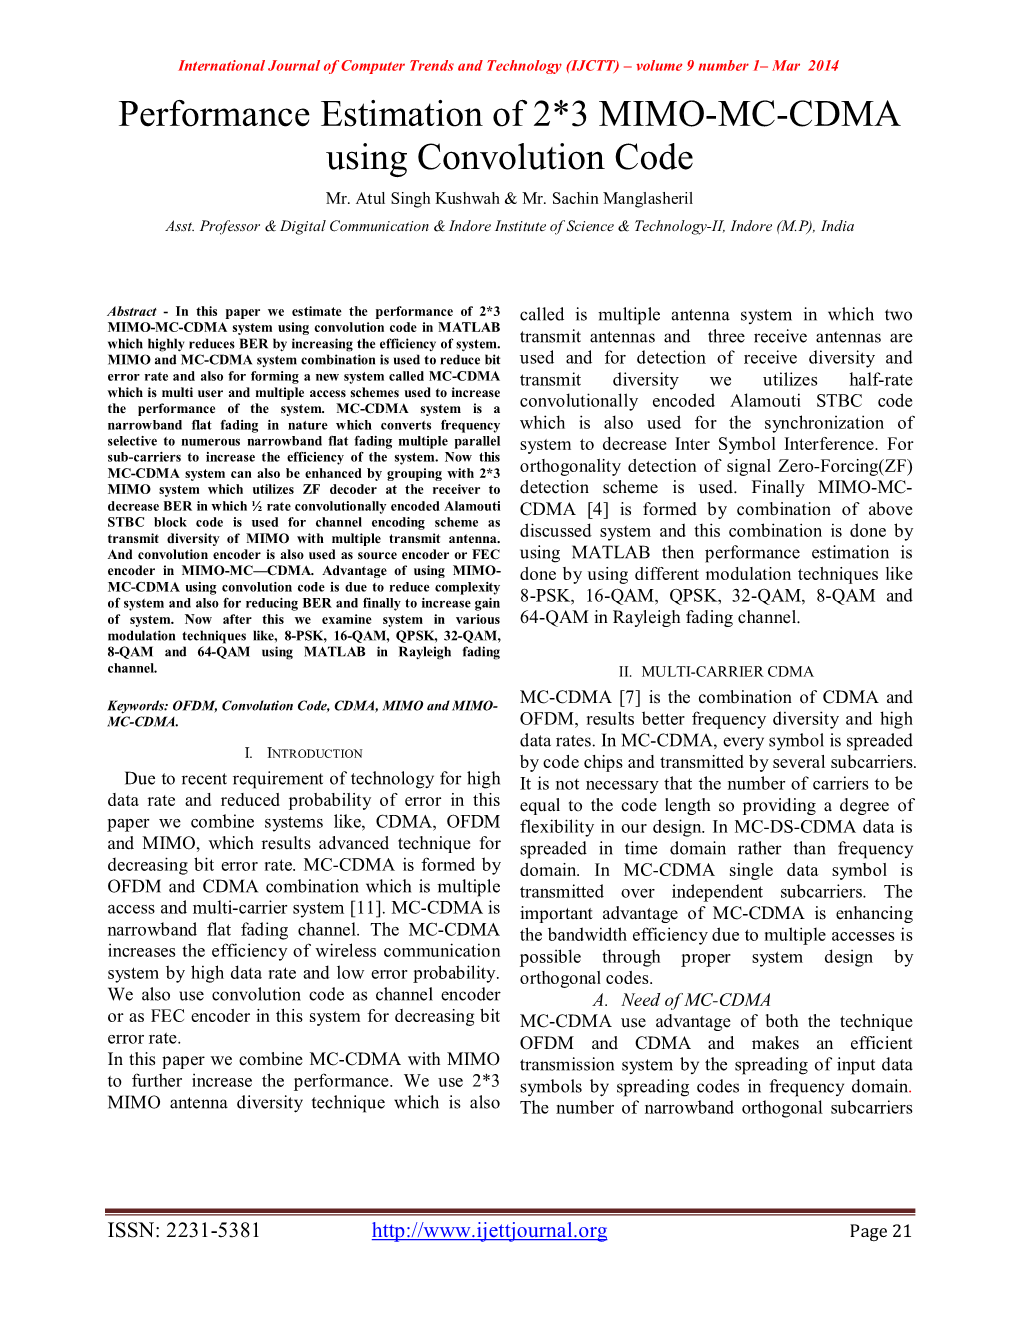 Performance Estimation of 2*3 MIMO-MC-CDMA Using Convolution Code Mr